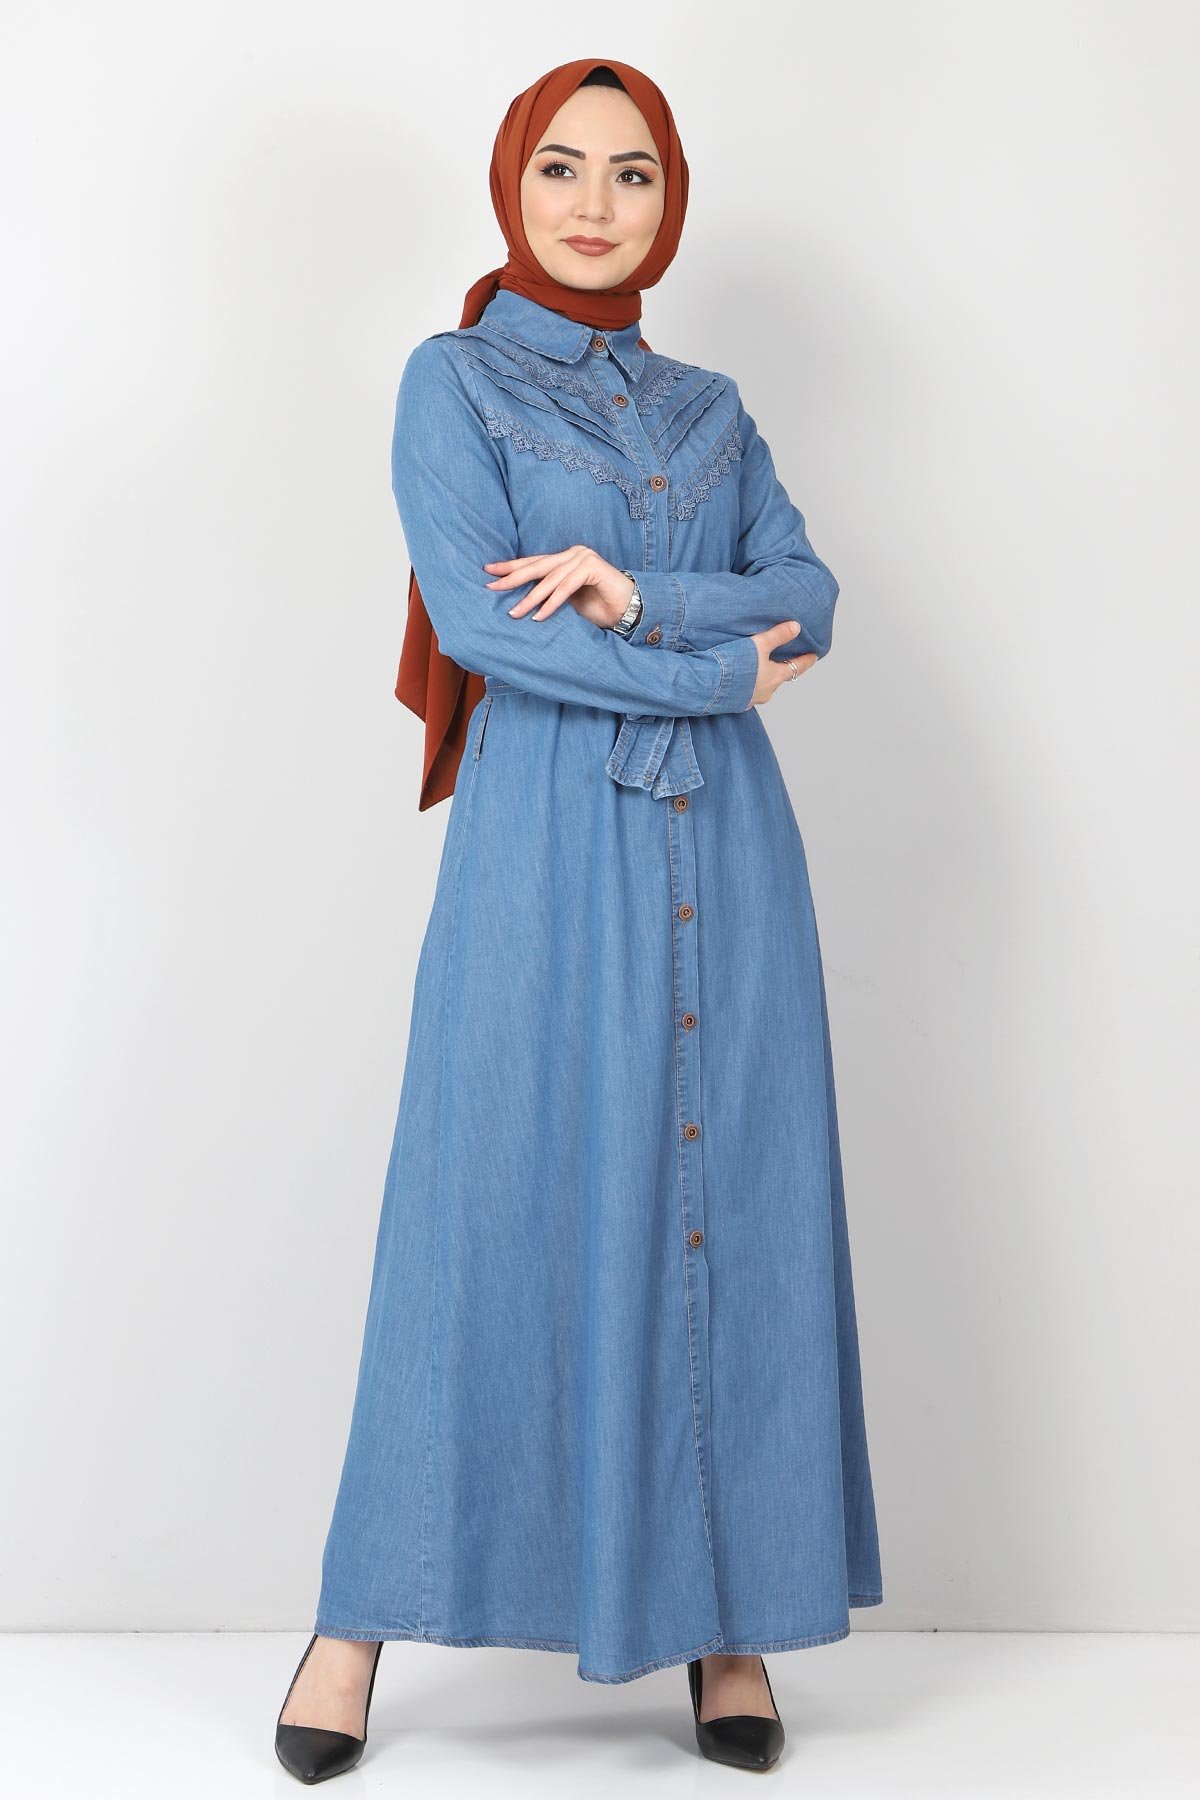 Önü Dantelli Kot Elbise TSD0129 Açık Mavi